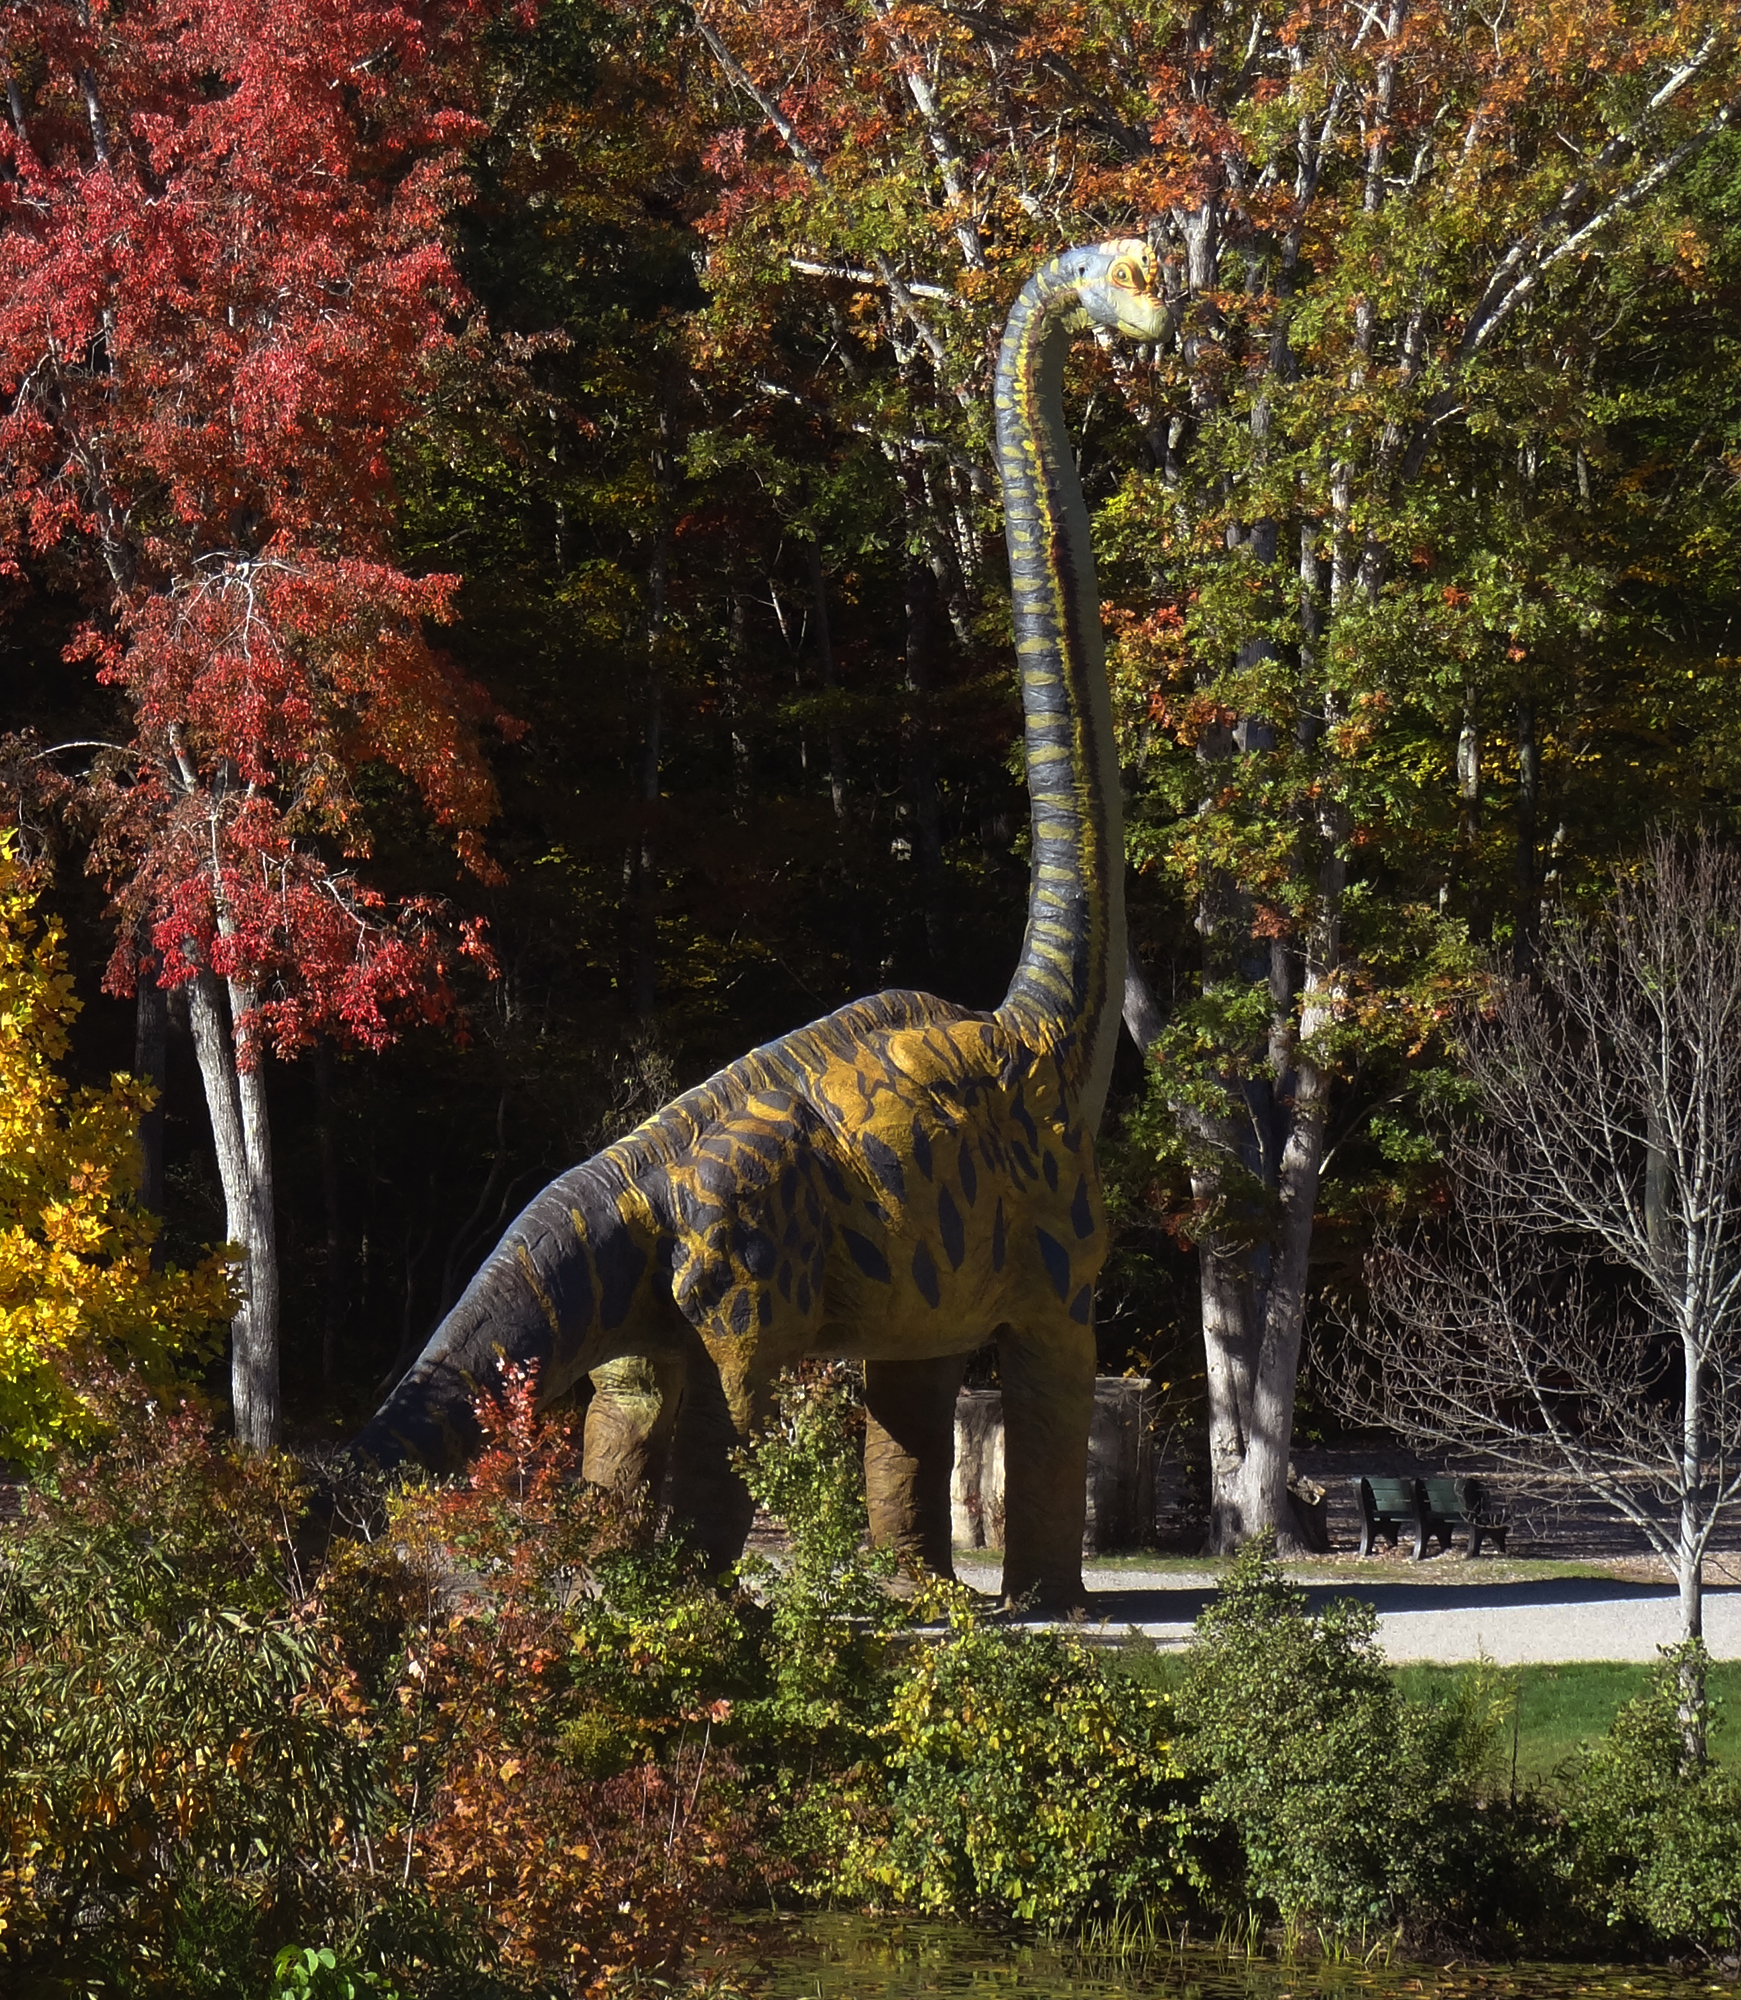 Brachiosaurus in the Fall